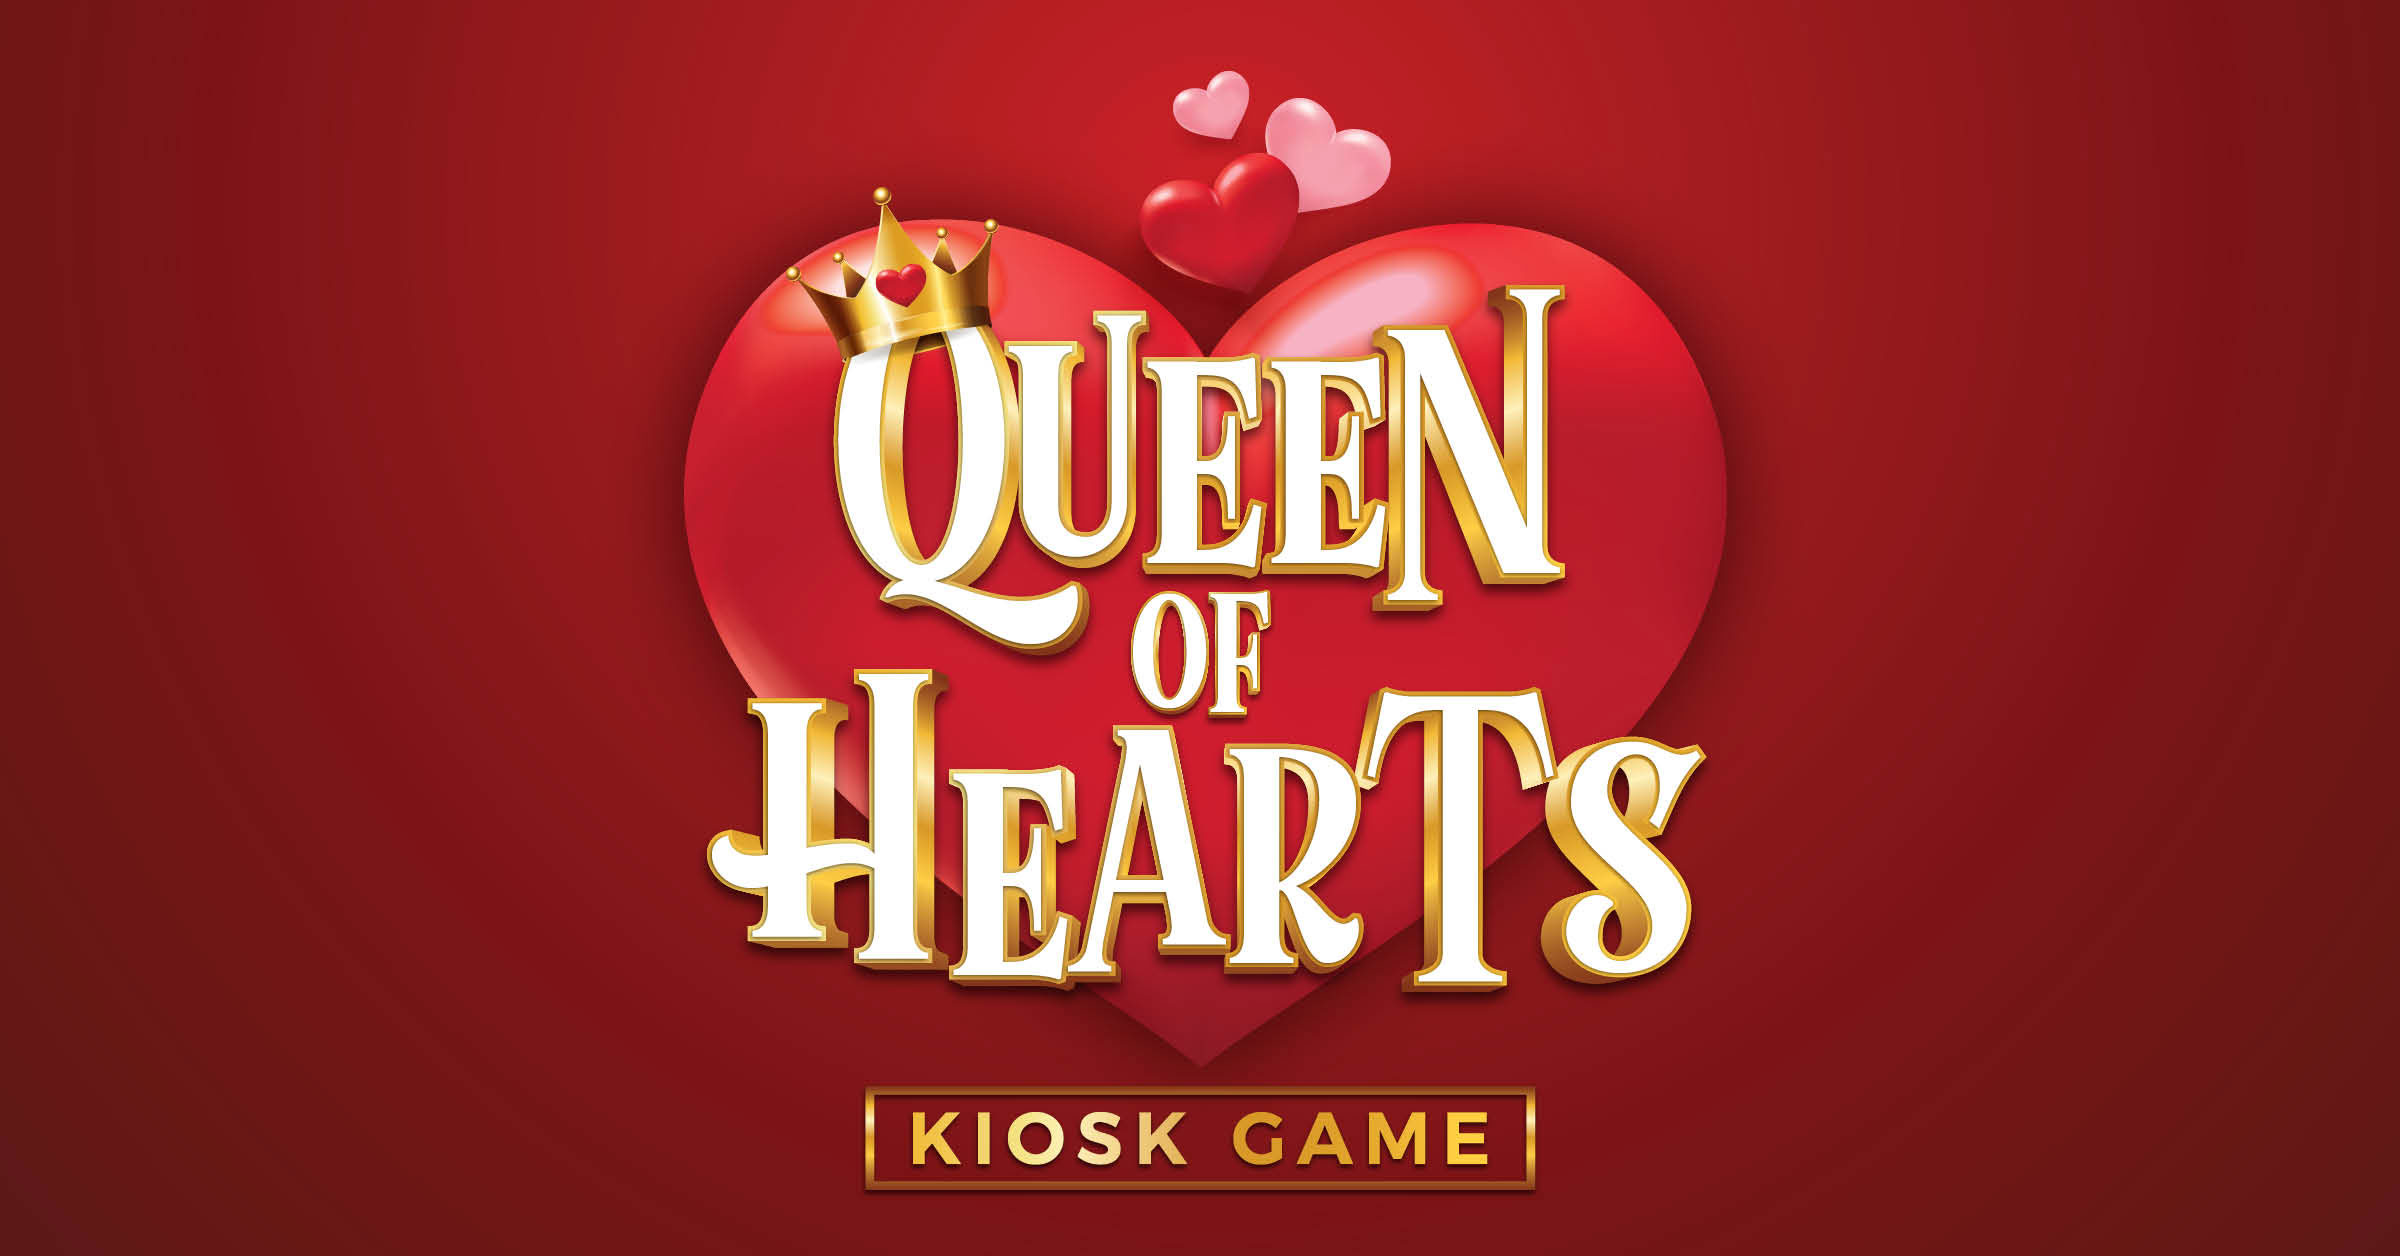 Queen of Hearts Kiosk Game